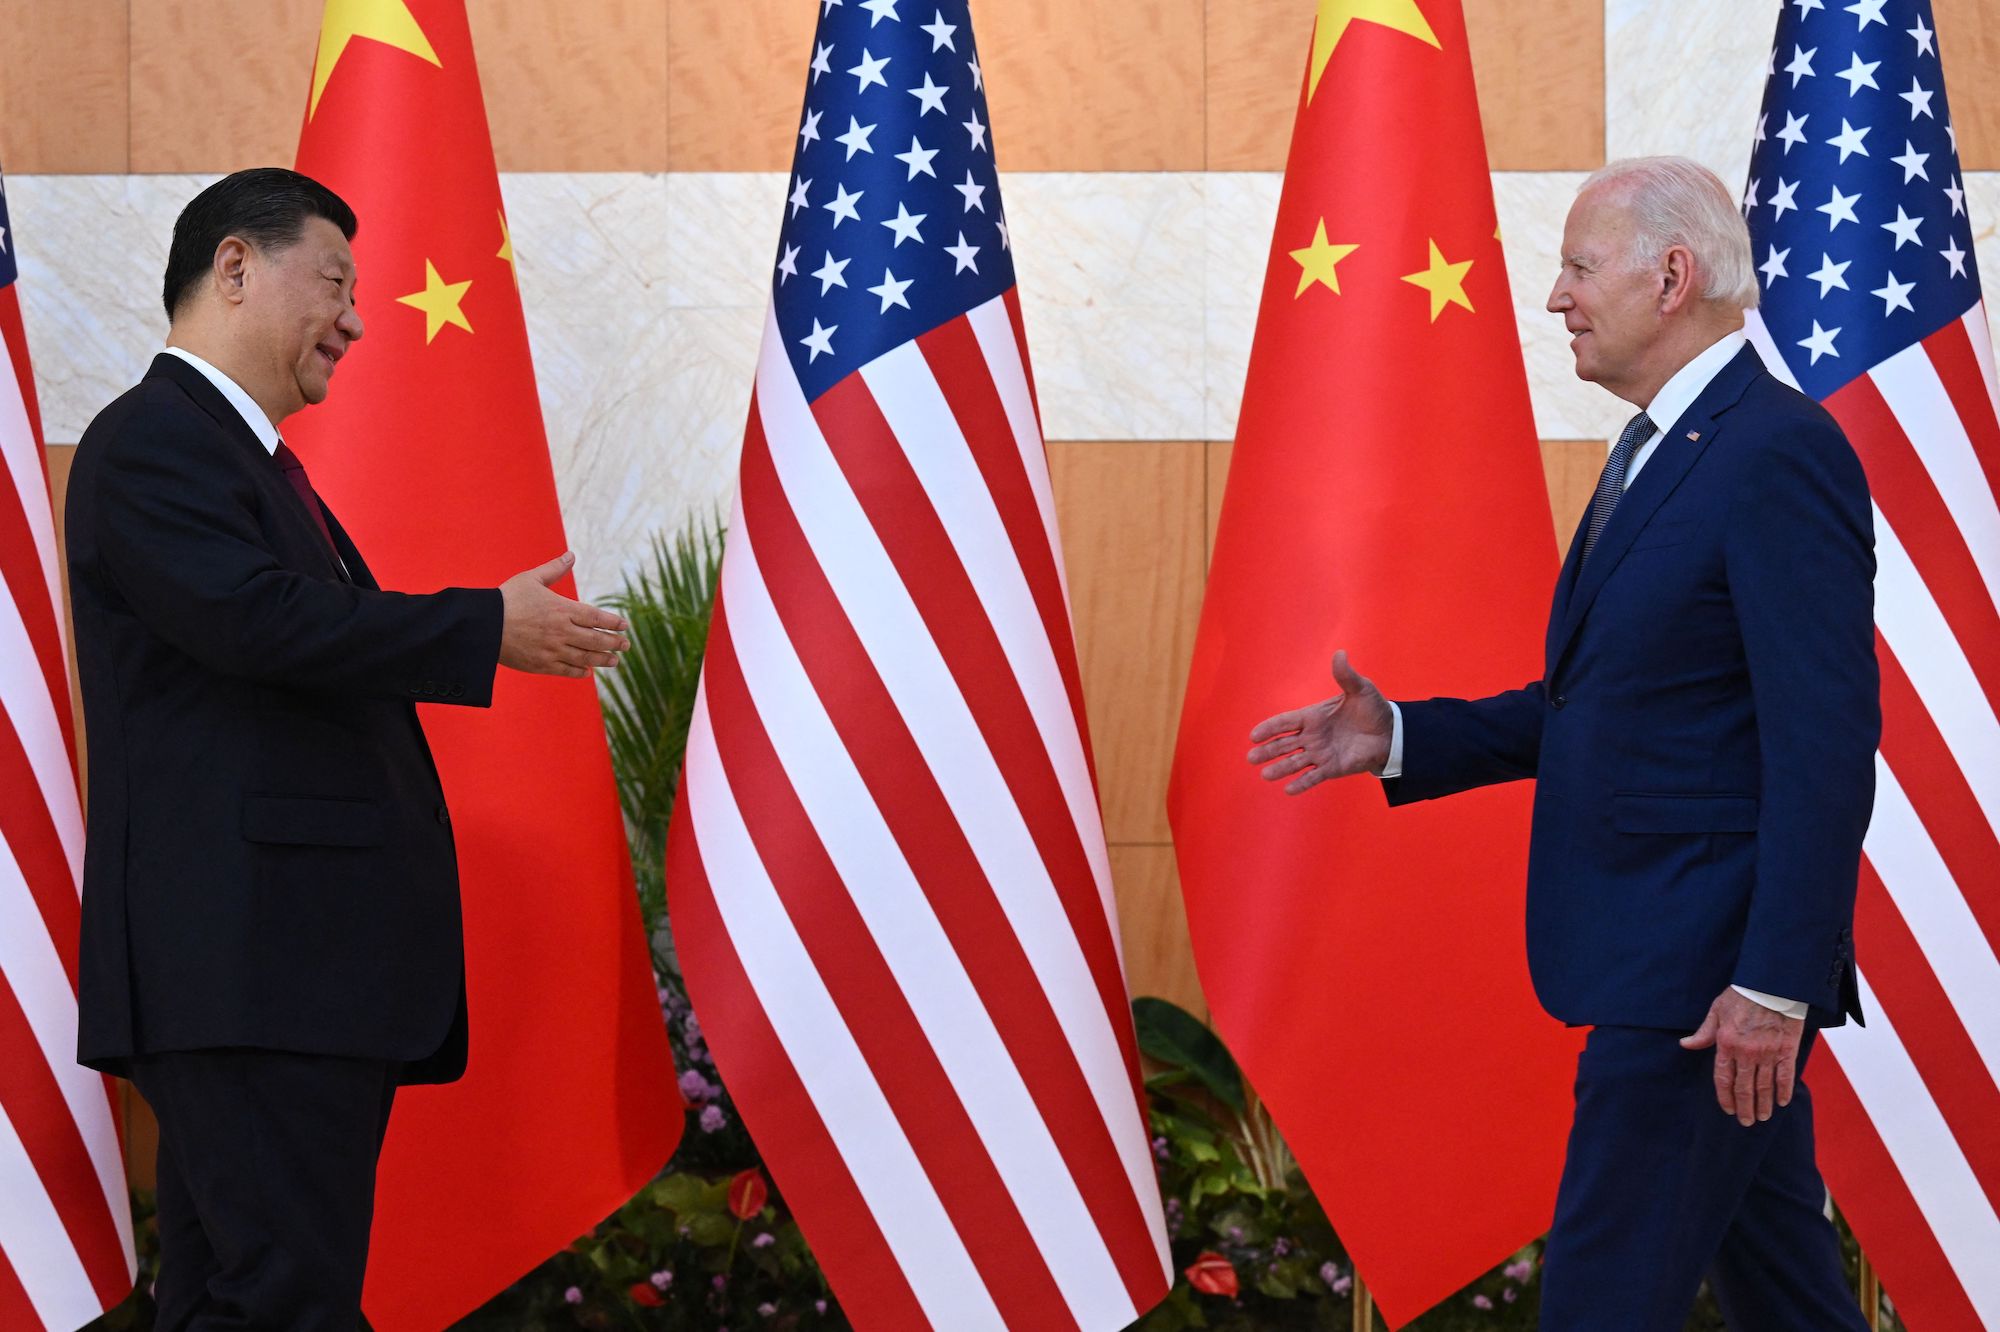 Joe Biden and Xi Jinping shake hands at the G20 Summit in Bali on November 14, 2022.